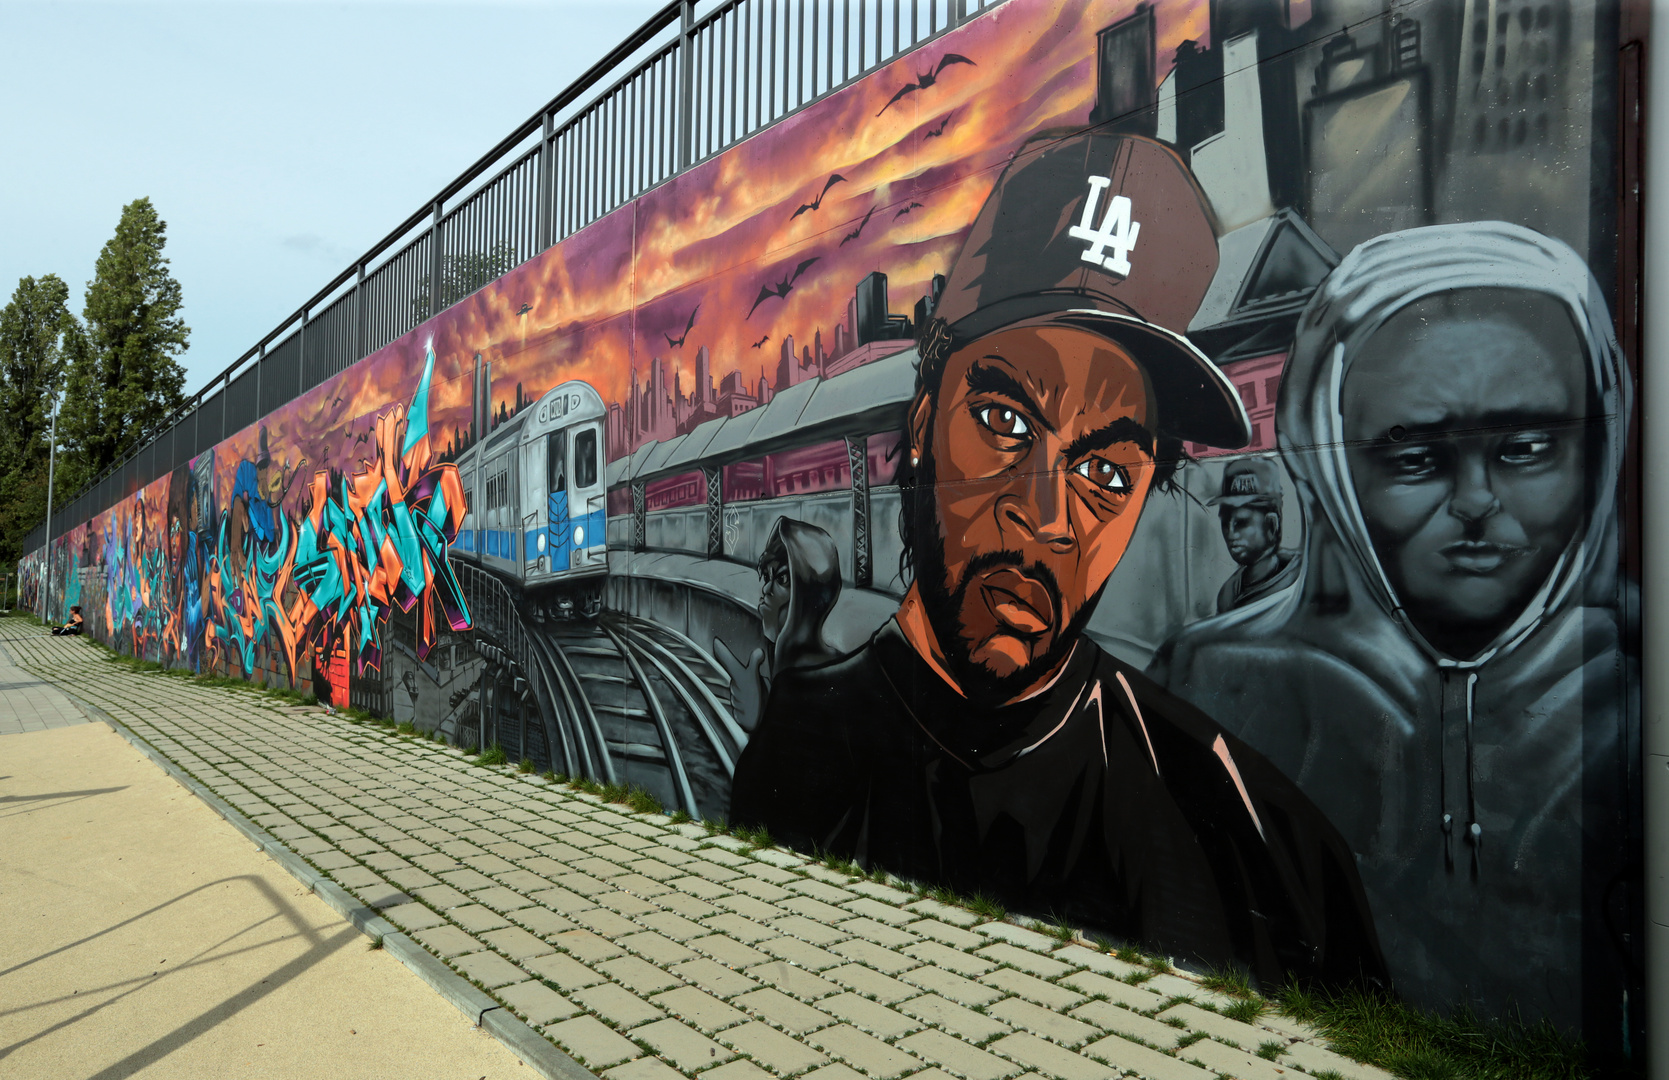 Graffiti - streetart